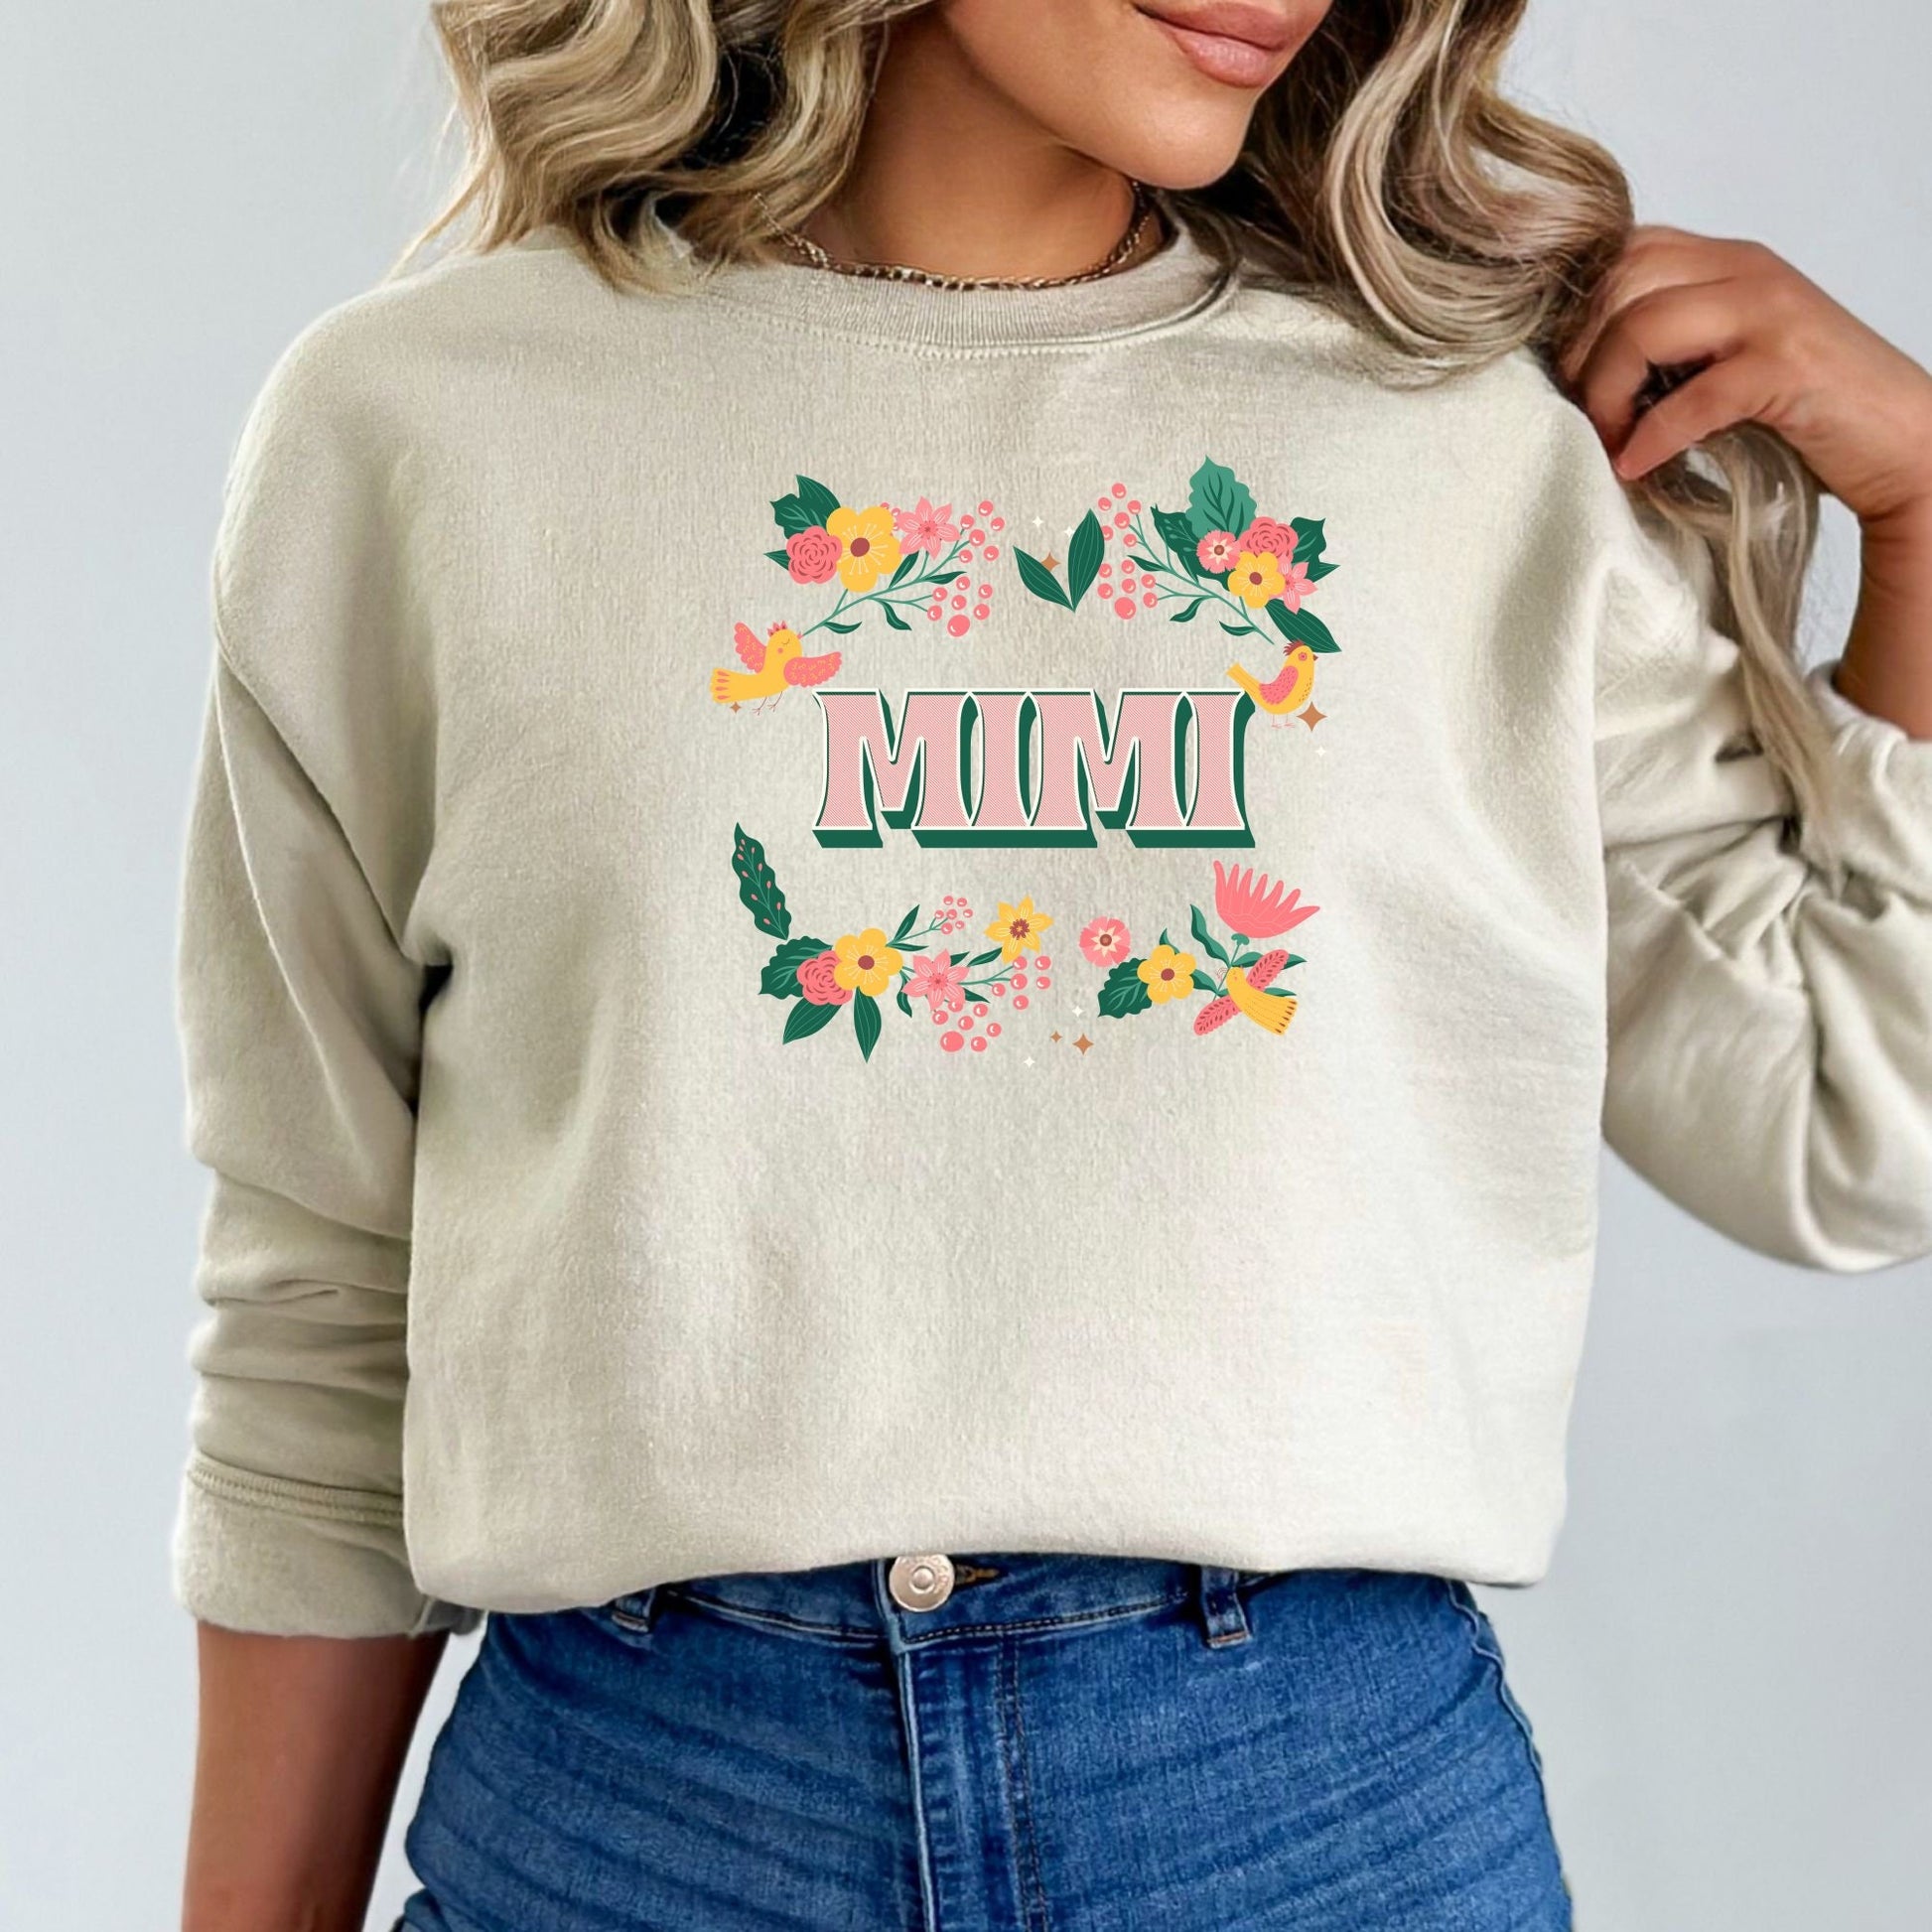 Mimi Floral Sweatshirt, Mimi Shirt, Grandmother Sweatshirt, Gift for Mimi, Mothers Day Sweatshirt, Pregnancy Announcement to Mimi